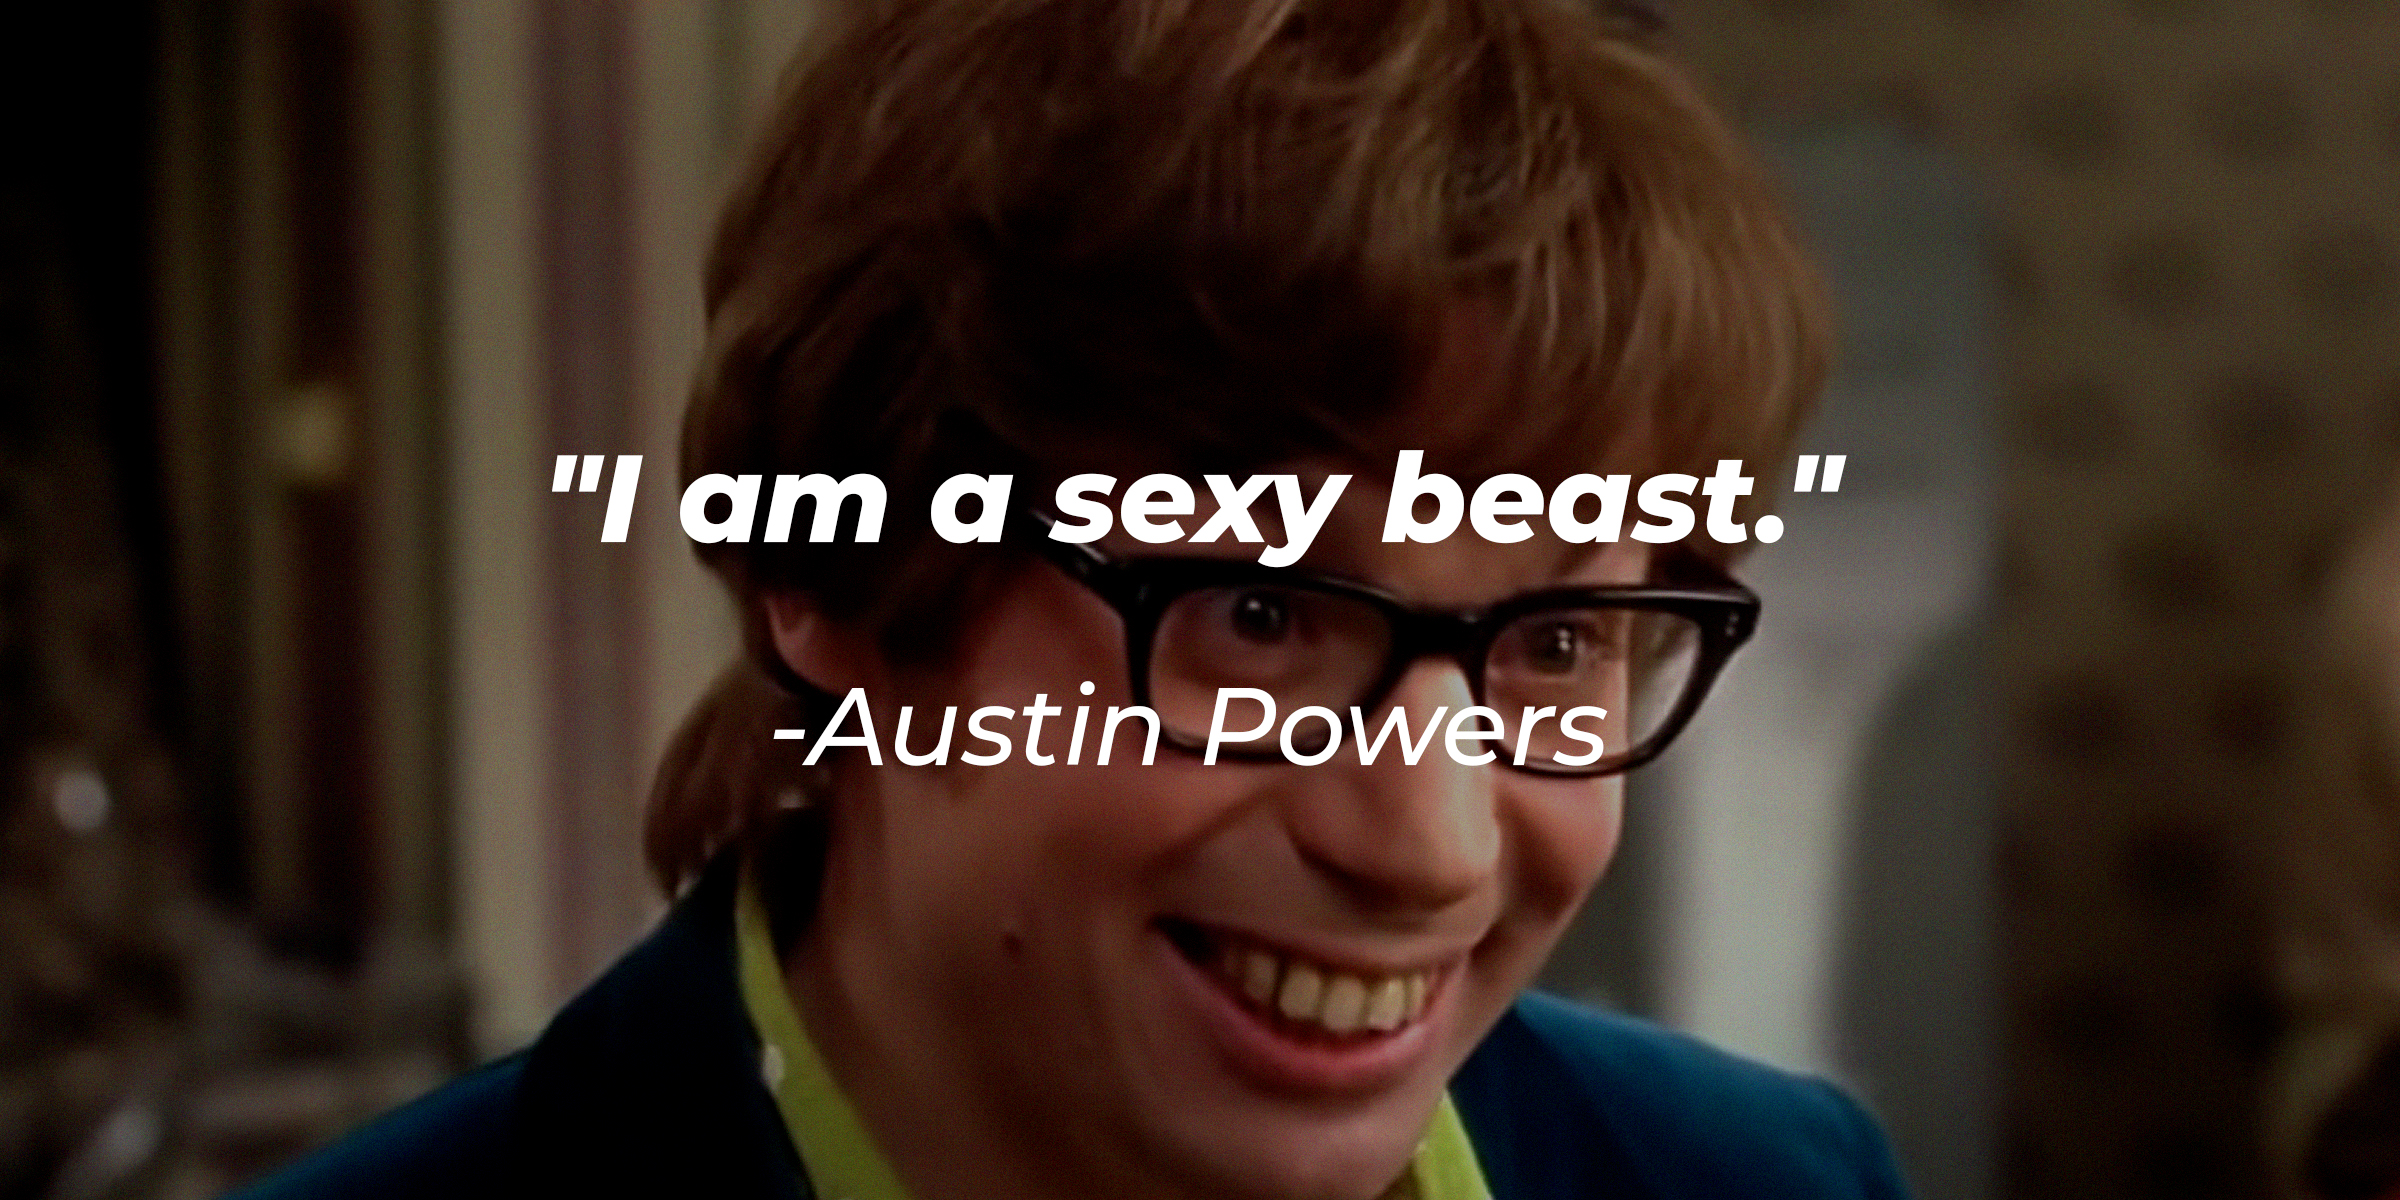 Austin Powers' quote: "I am a sexy beast." | Source: facebook.com/austinpowersmovie